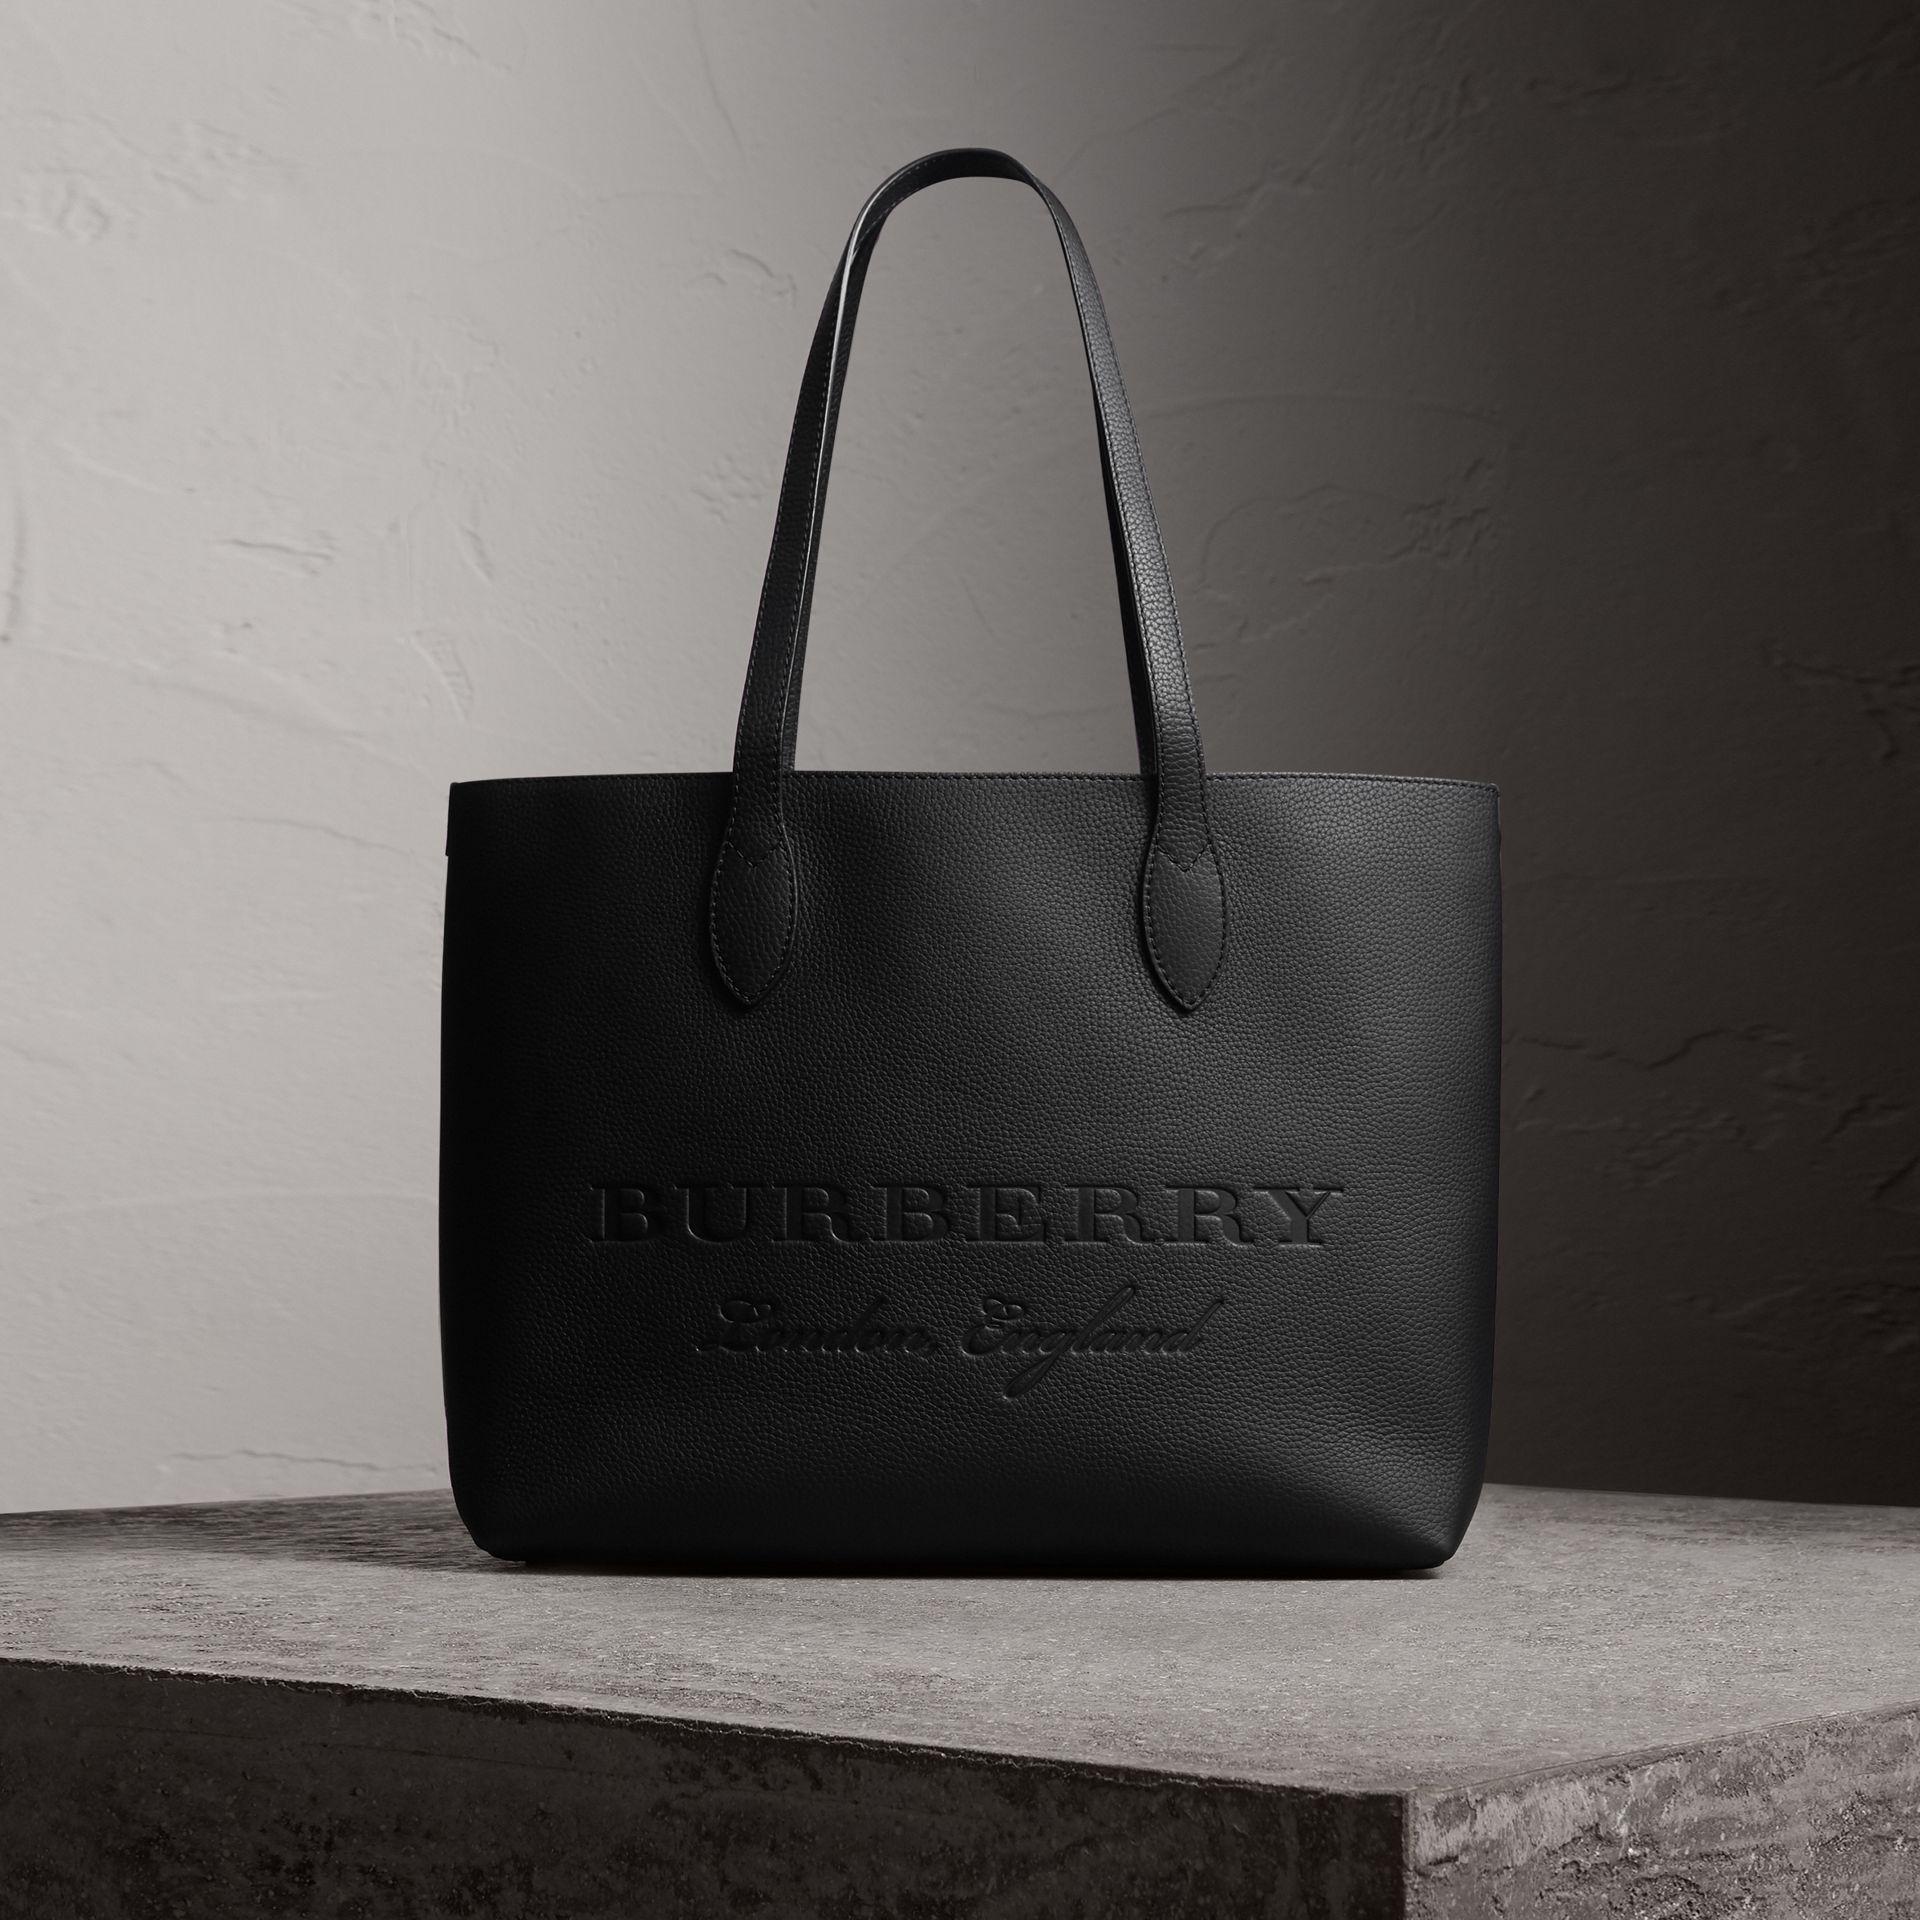 Burberry Embossed Monogram Black Leather Tote